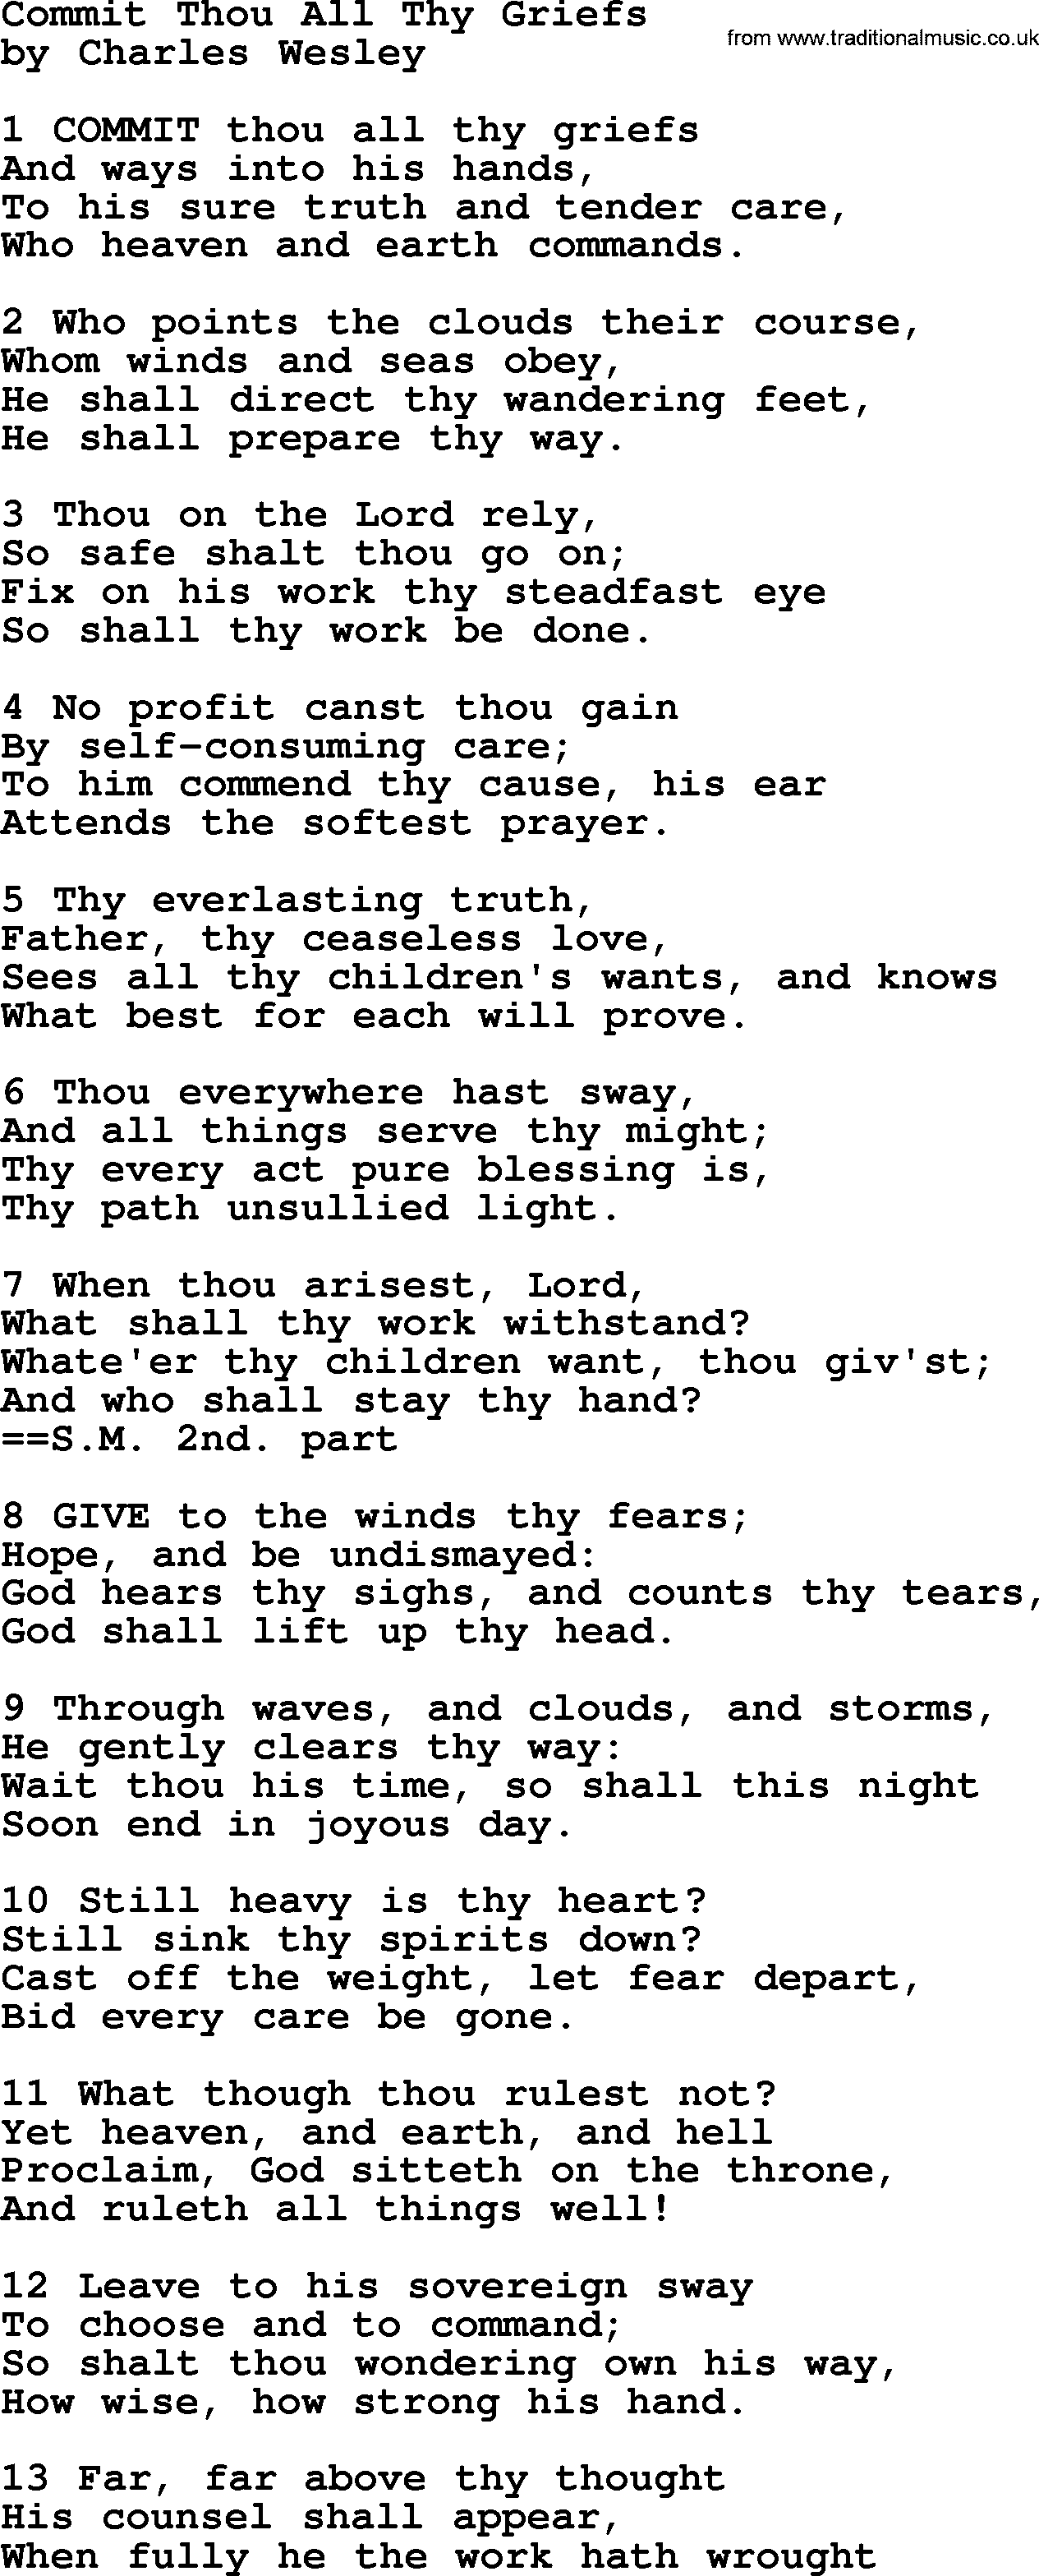 Charles Wesley hymn: Commit Thou All Thy Griefs, lyrics